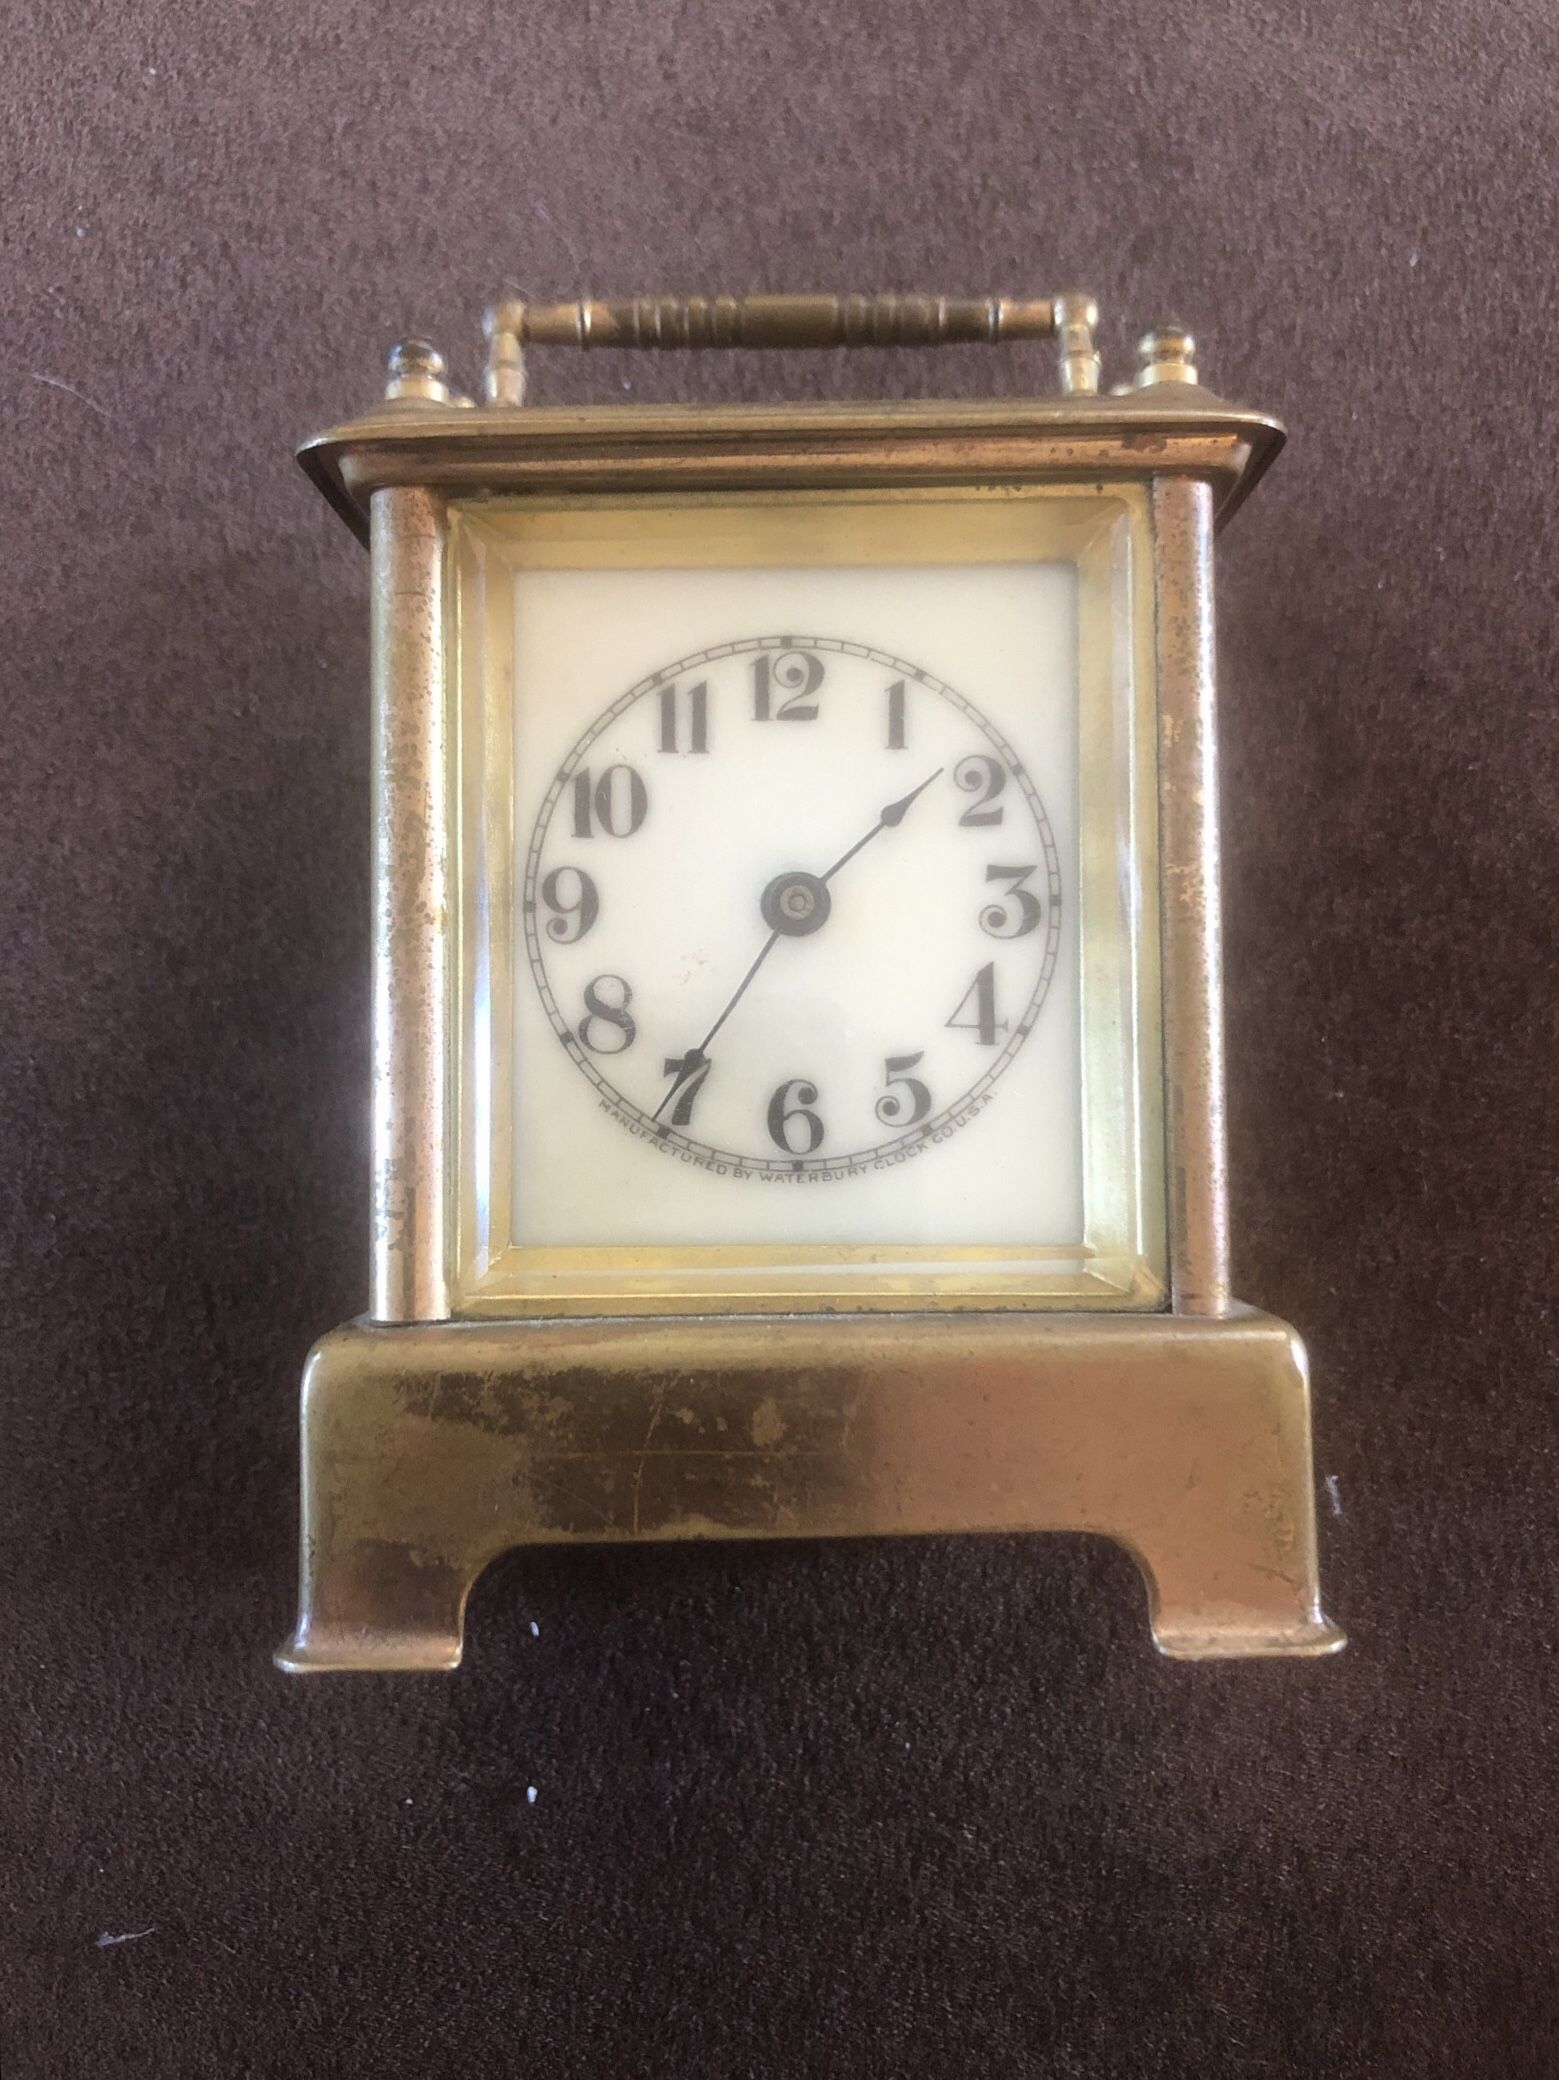 Antique Waterbury Brass Repeater Alarm Clock-Alarm Works-Clock Overwound